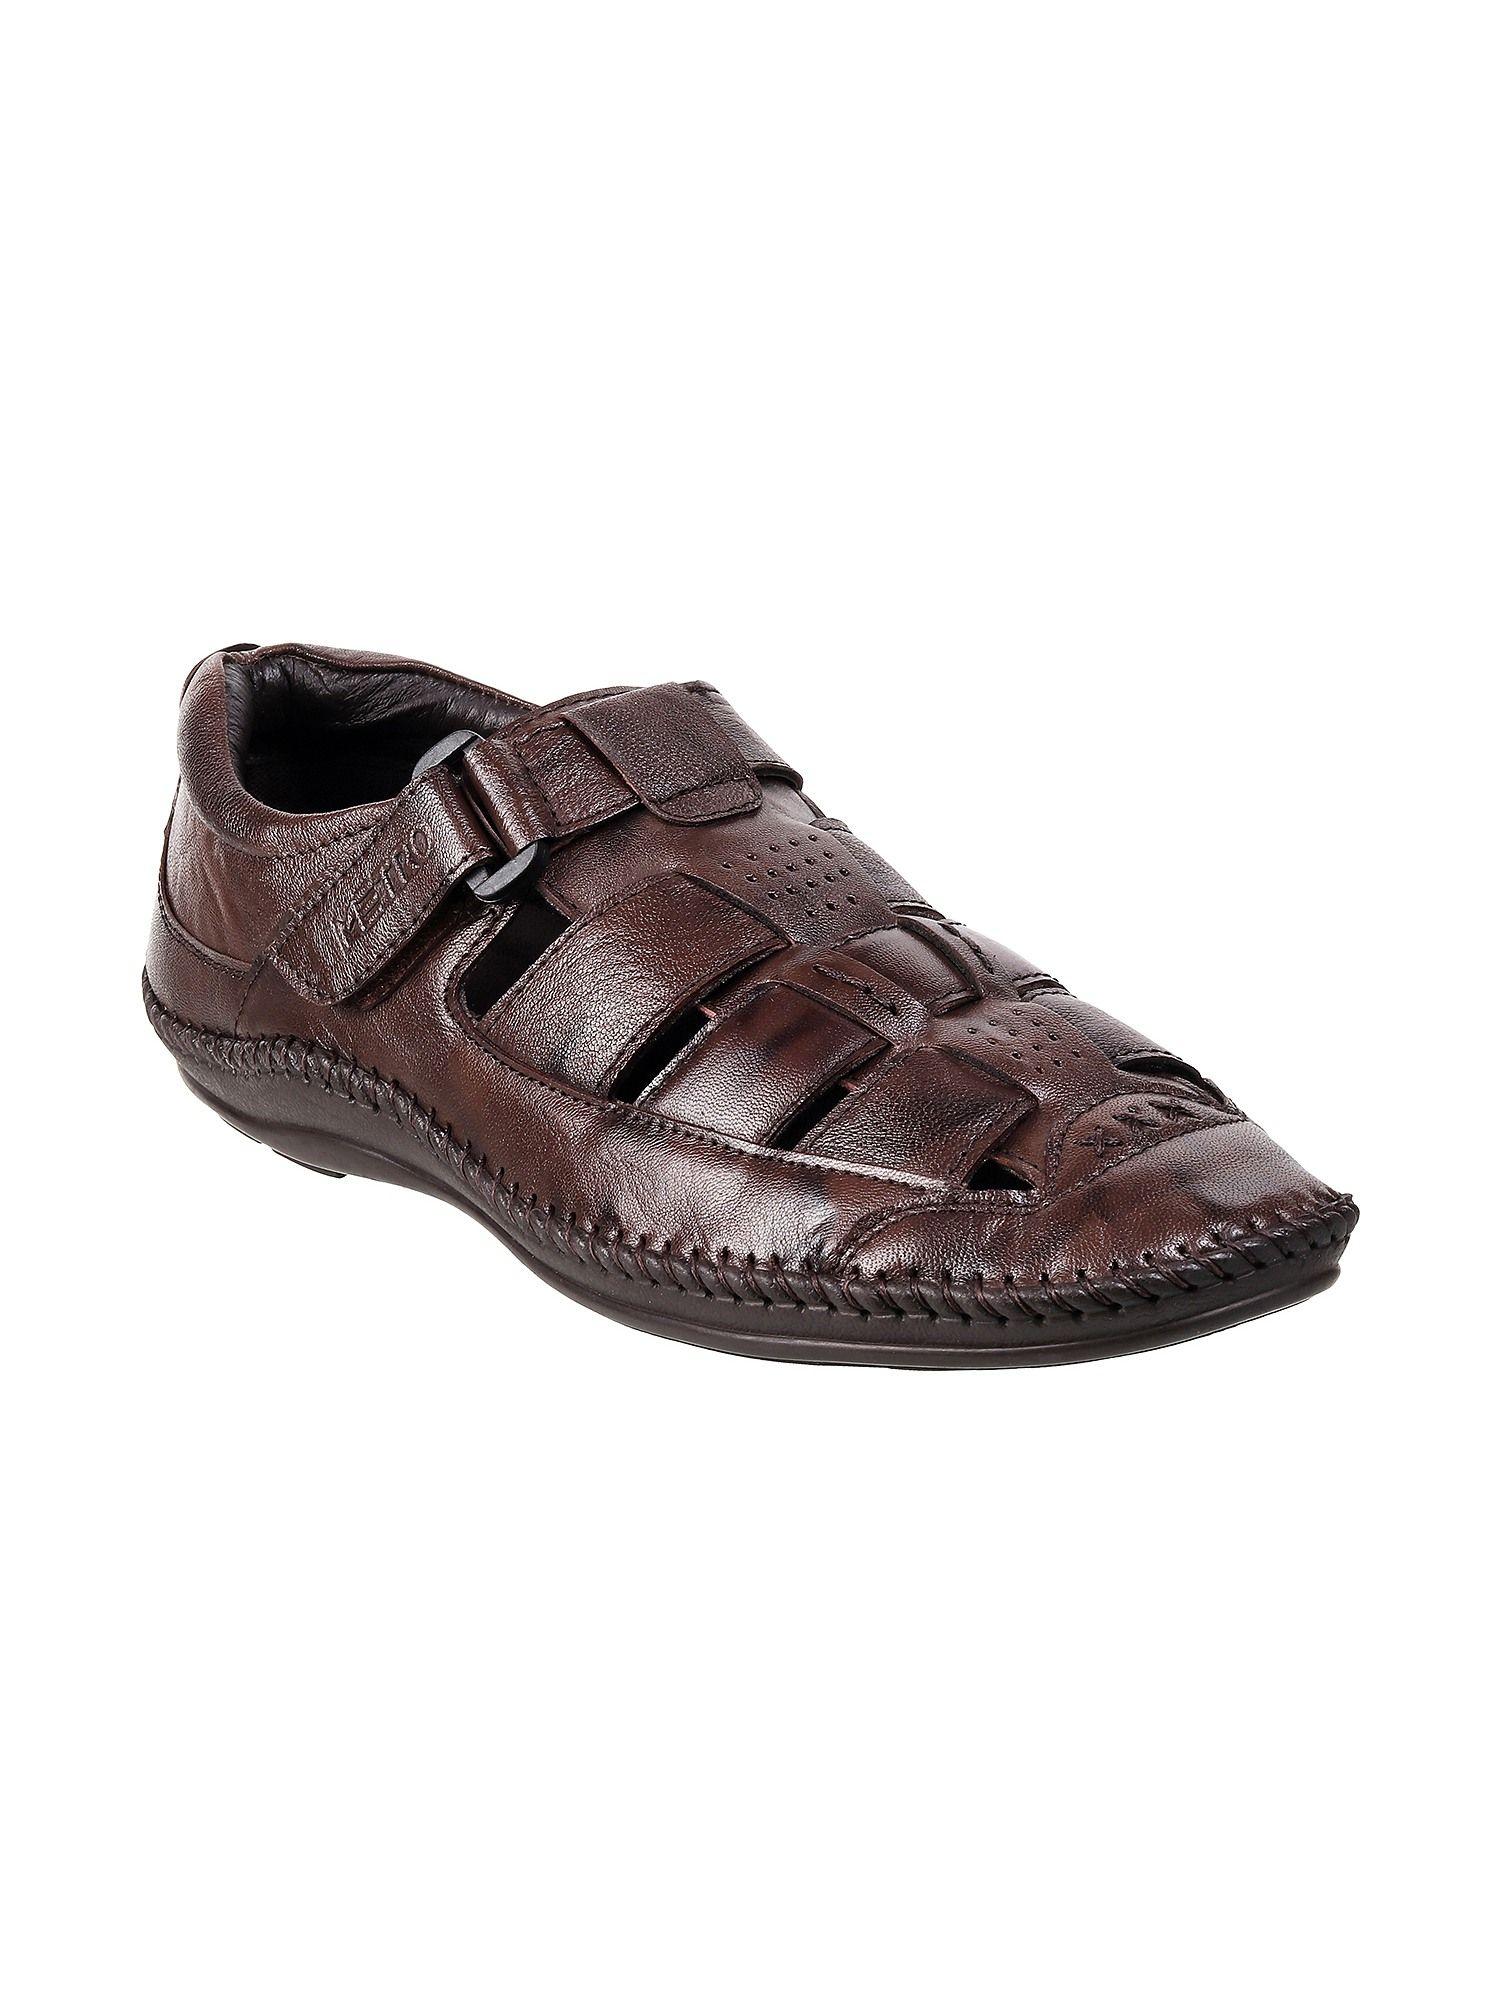 mens brown flat casual sandalsmetro textured brown sandals